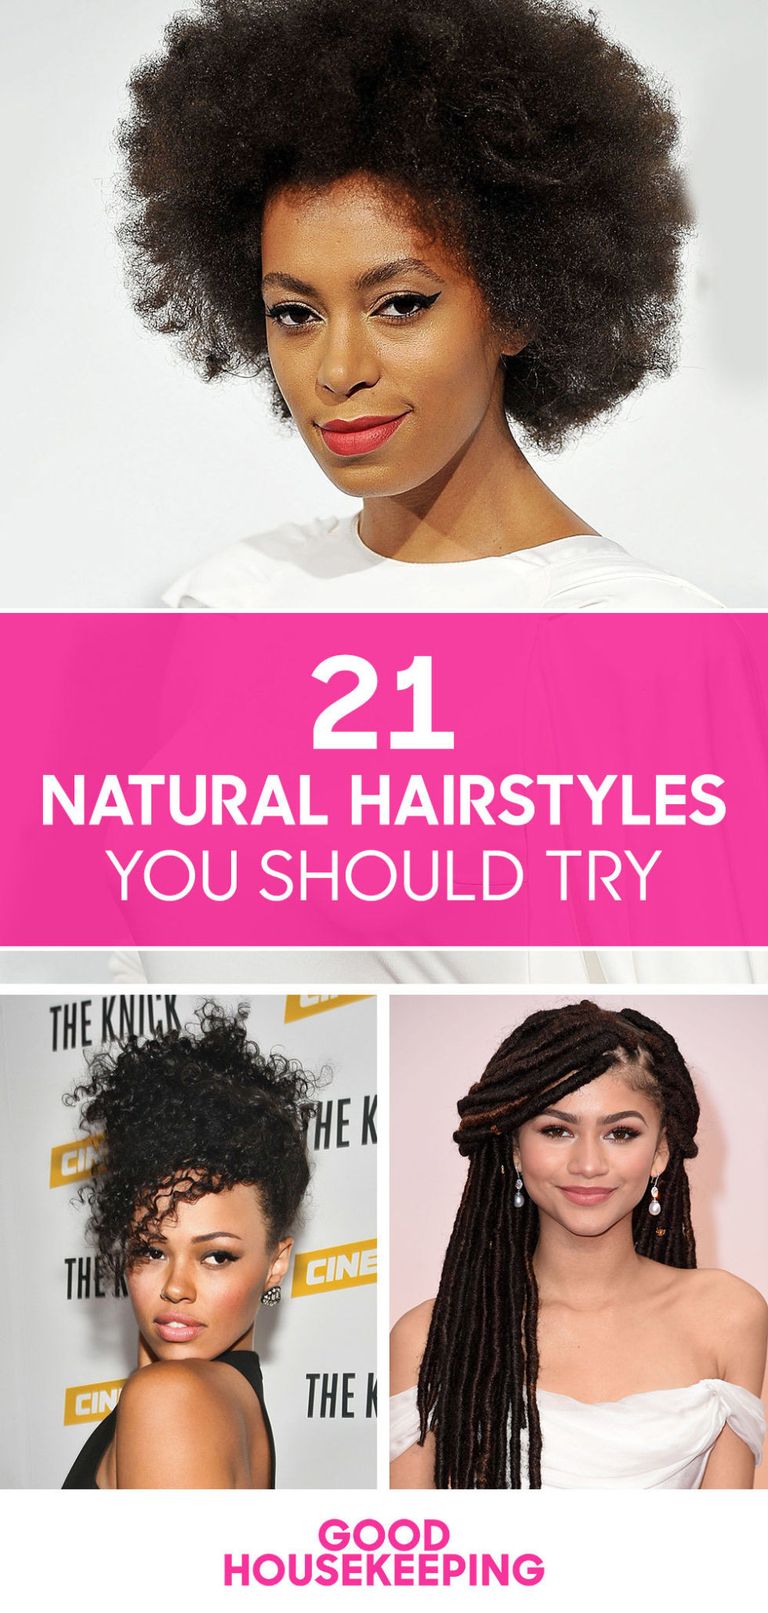 25+ Easy Natural Hairstyles for Black Women - Ideas for Short, Medium ...